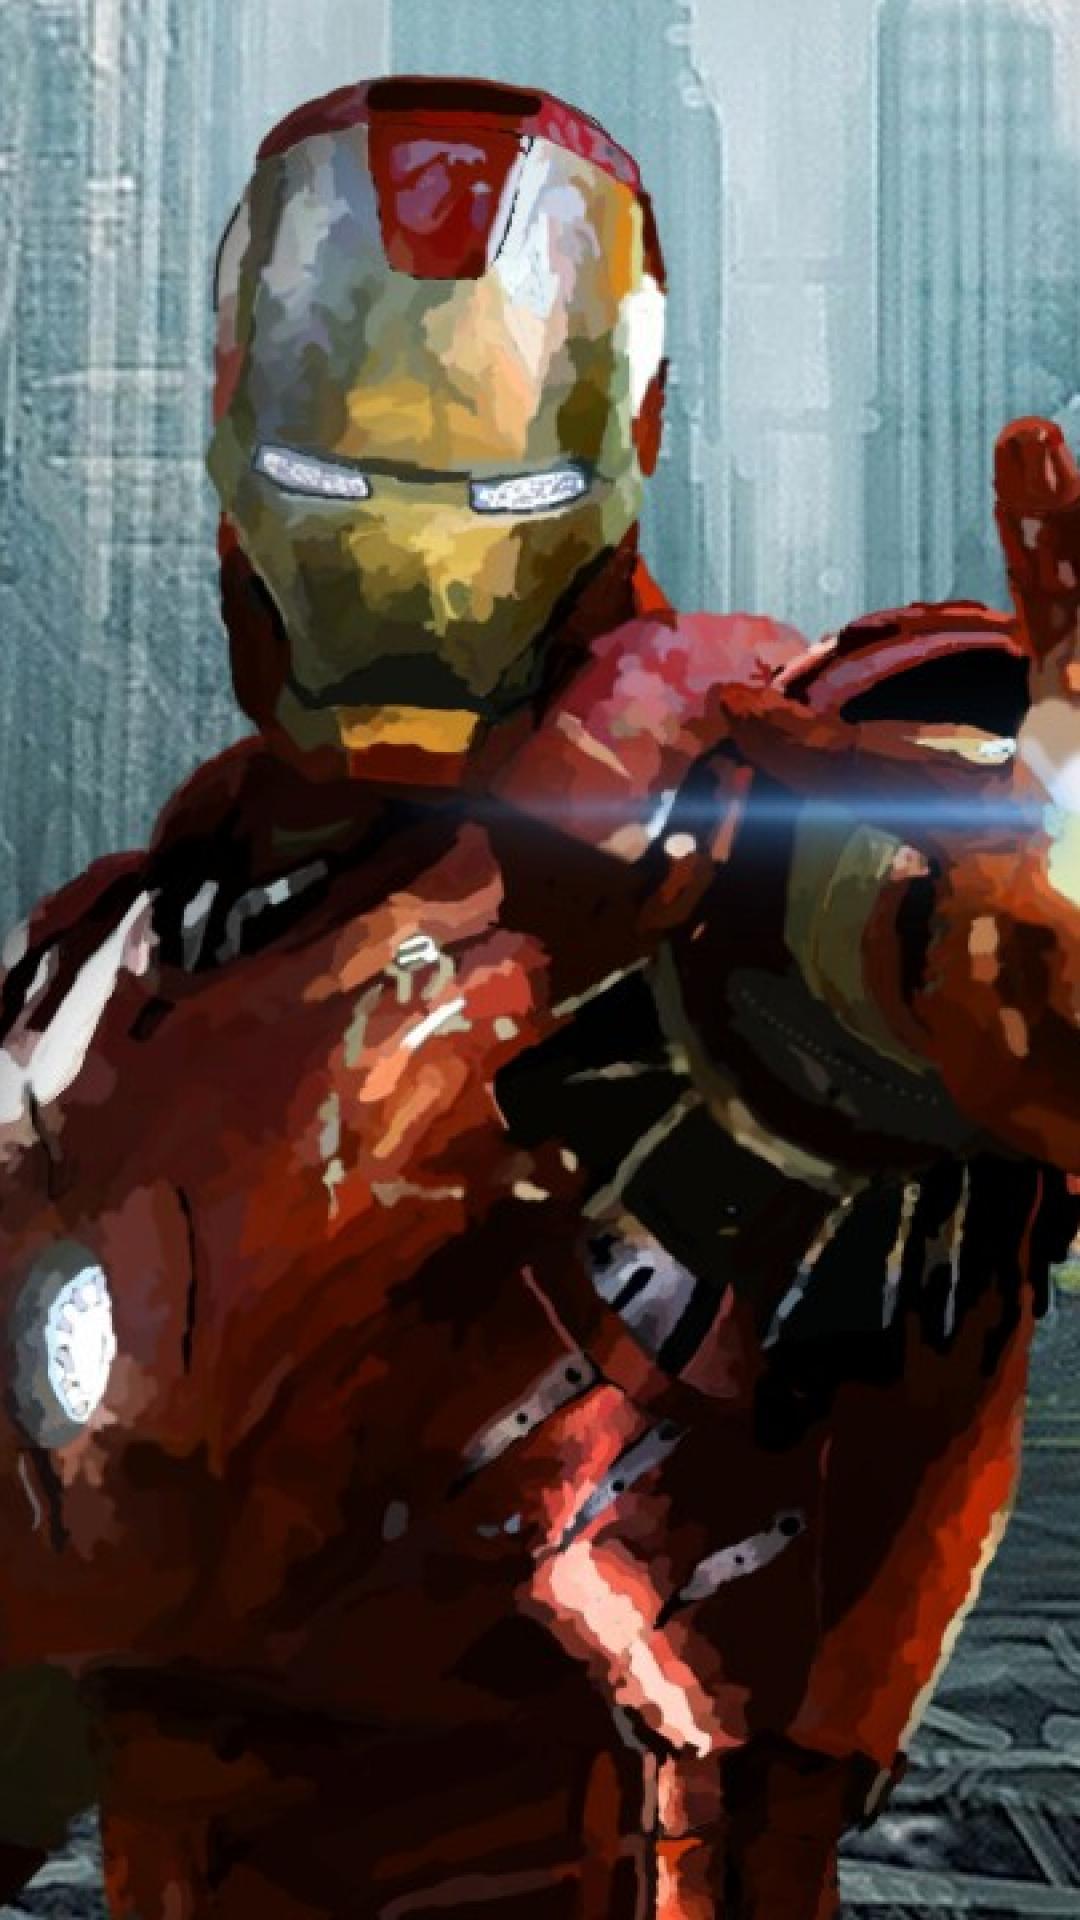 Iron man robots 2 hero avengers 3 wallpapers